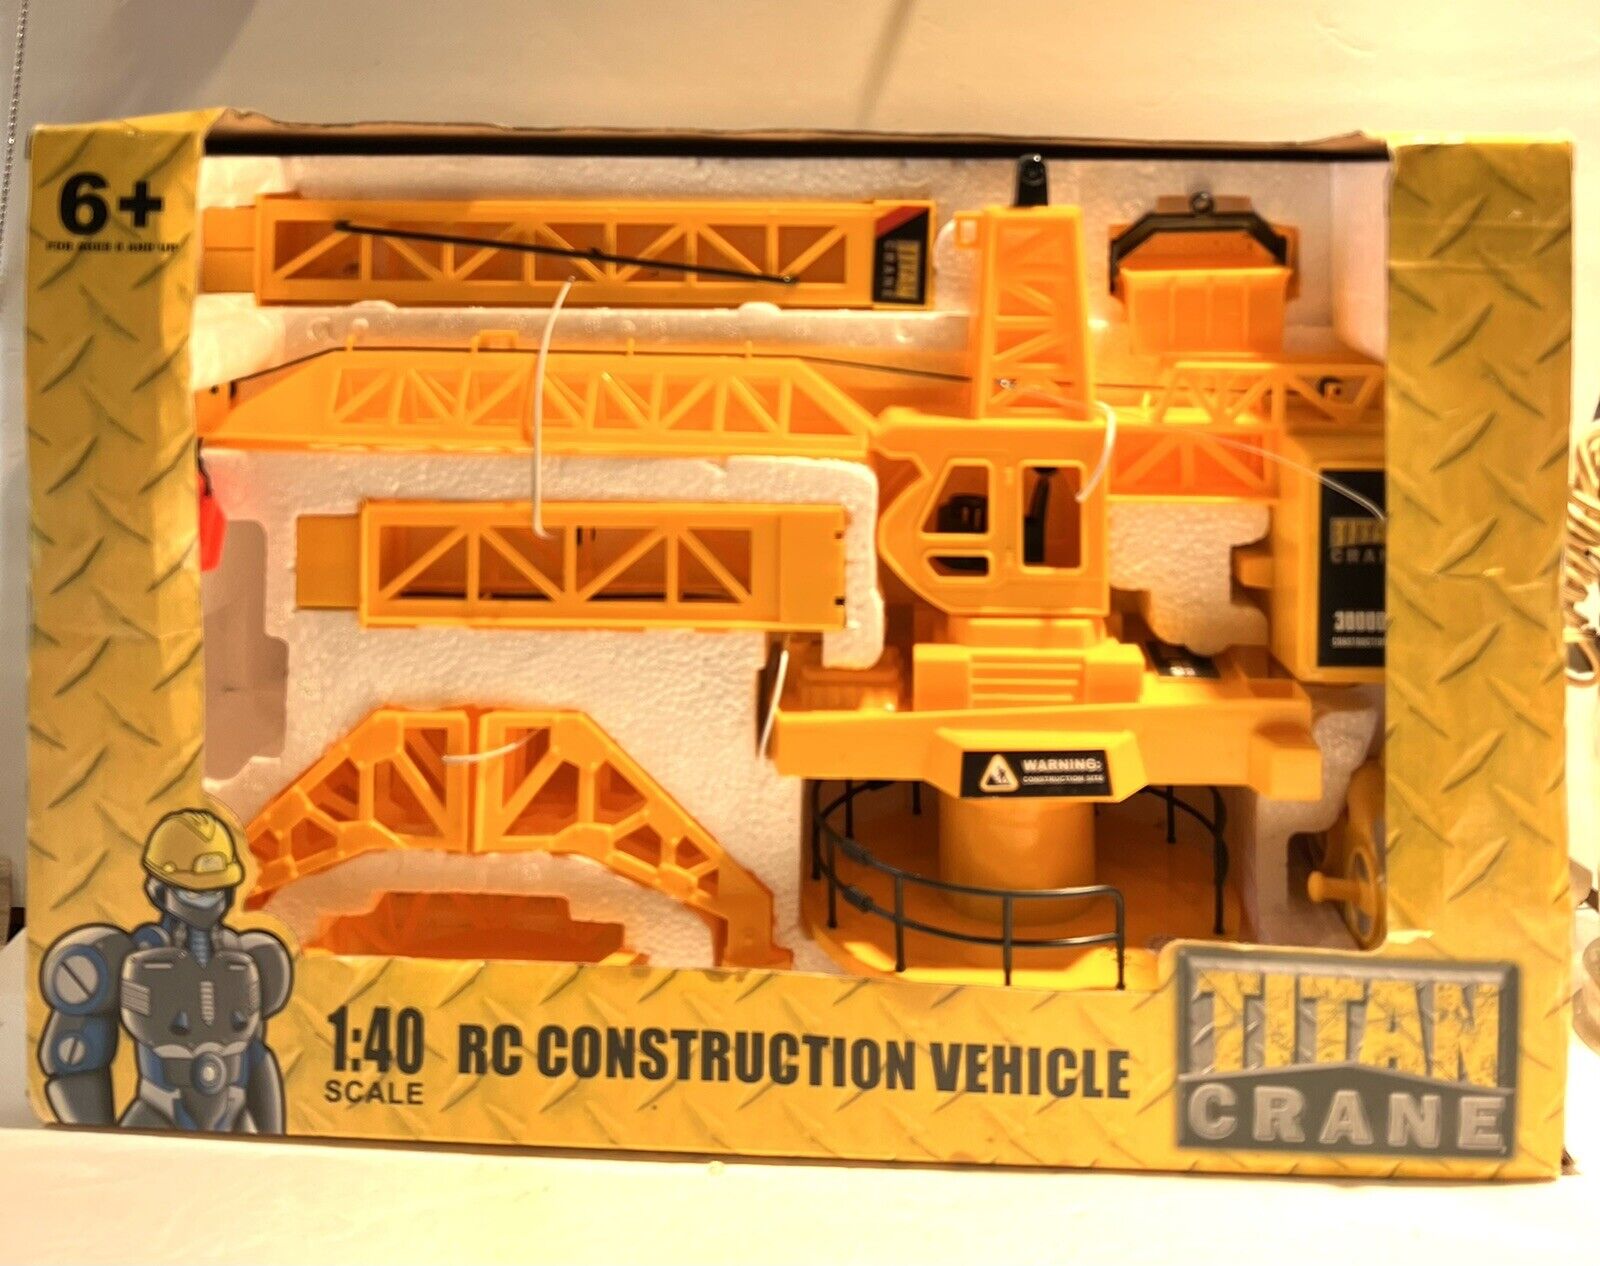 Titan Crane RC CONSTRUCTION VEHICLE